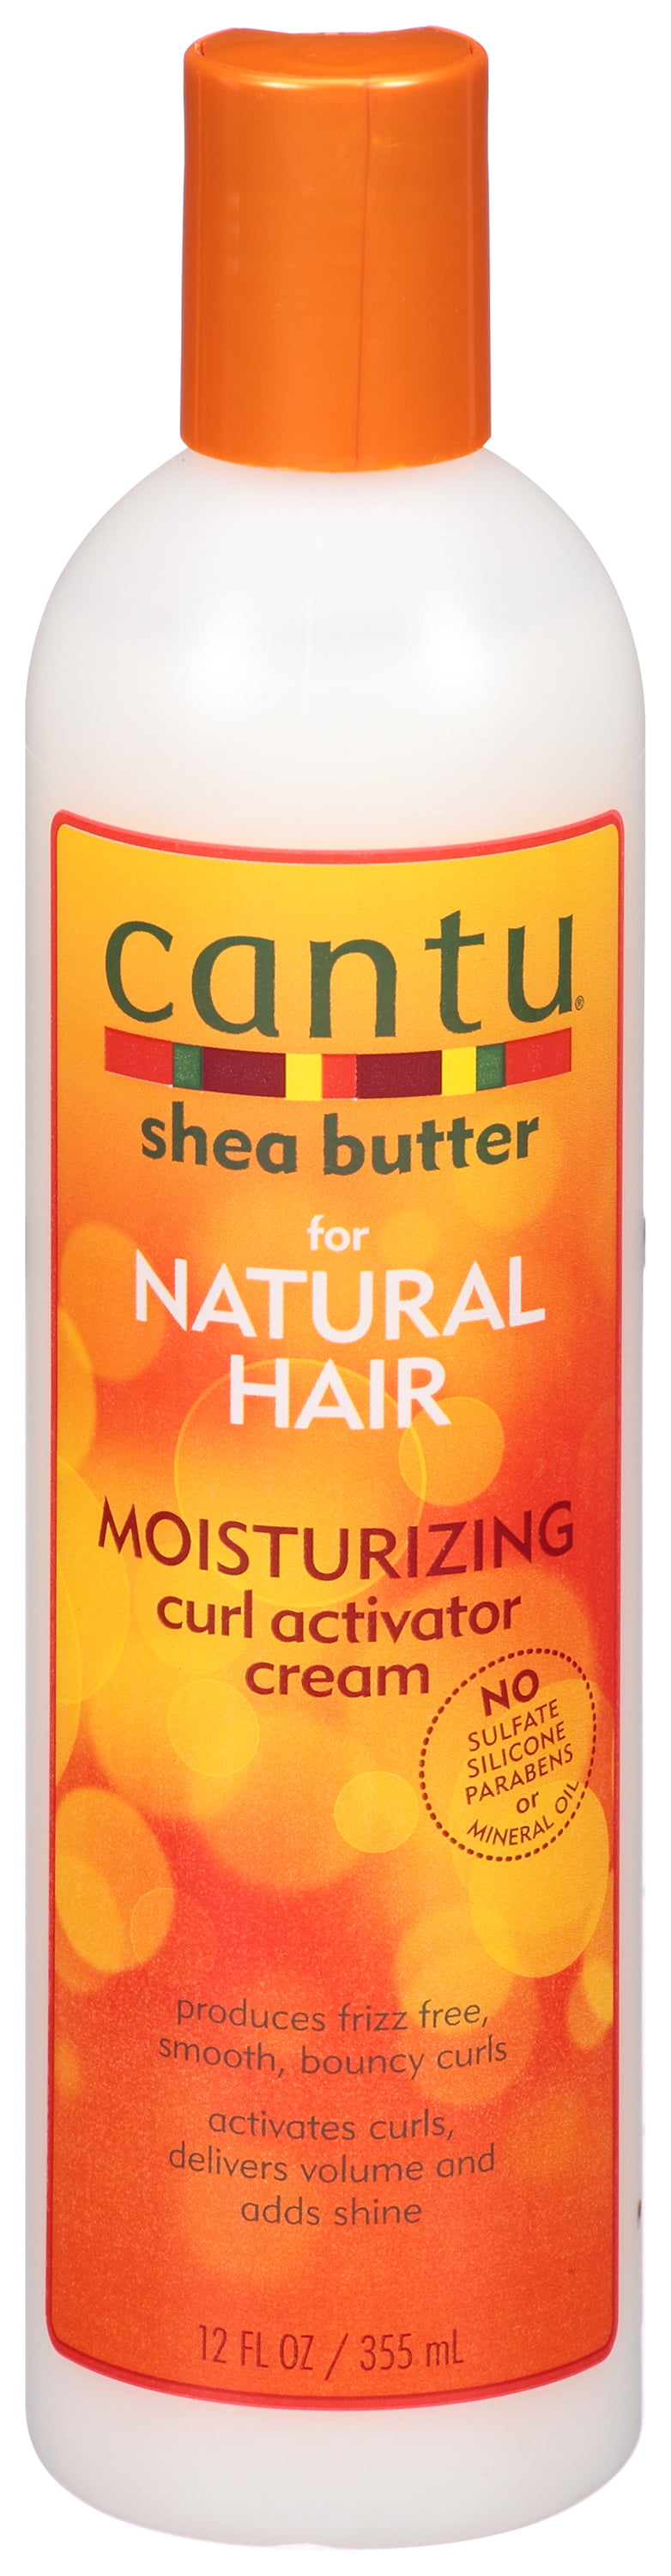 Cantu Shea Butter for Natural Hair Moisturizing Curl Activator Cream 12 fl. oz. Bottle